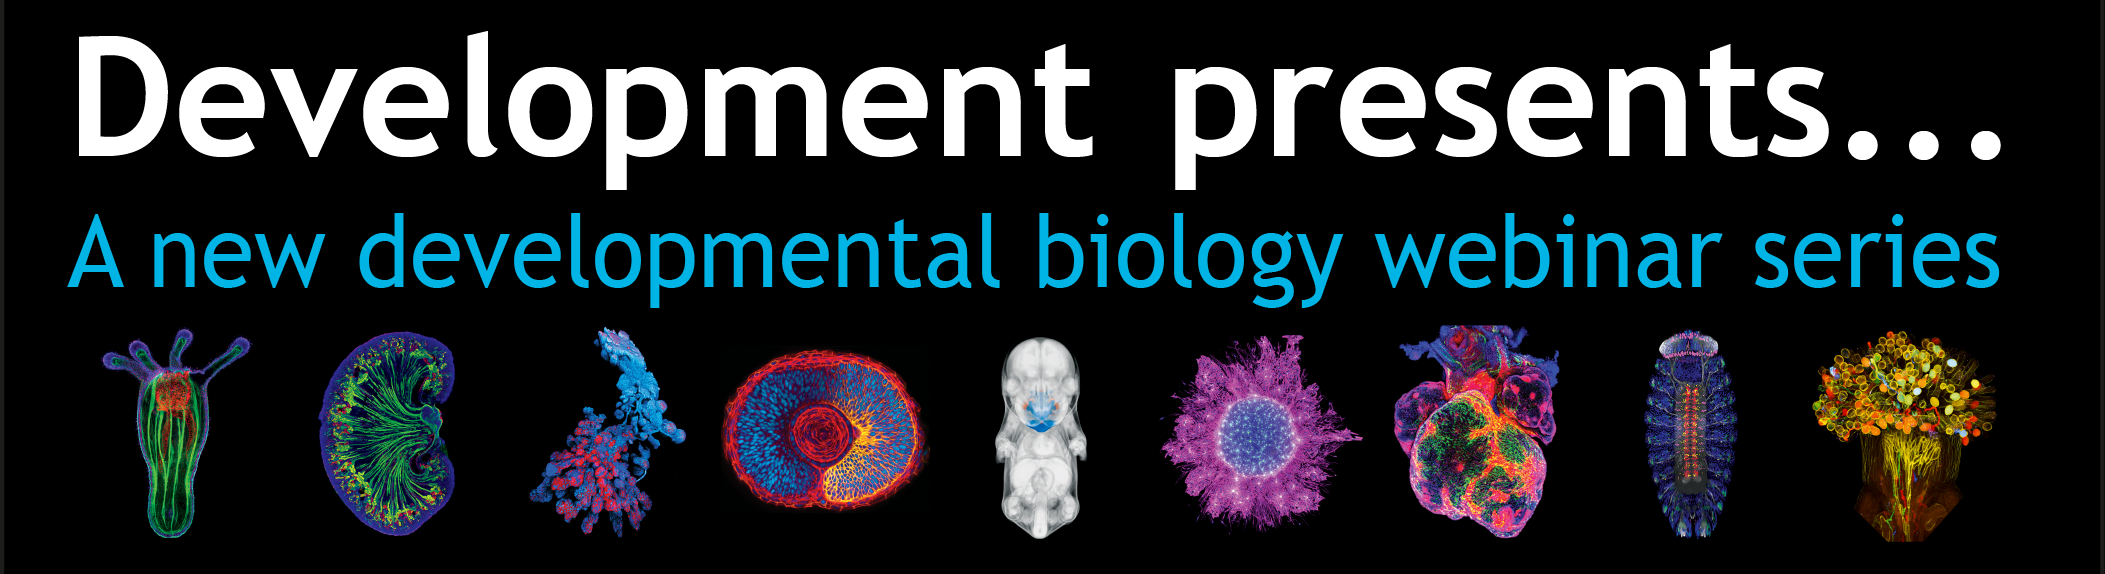 A banner saying Development presents a new developmental biology webinar series